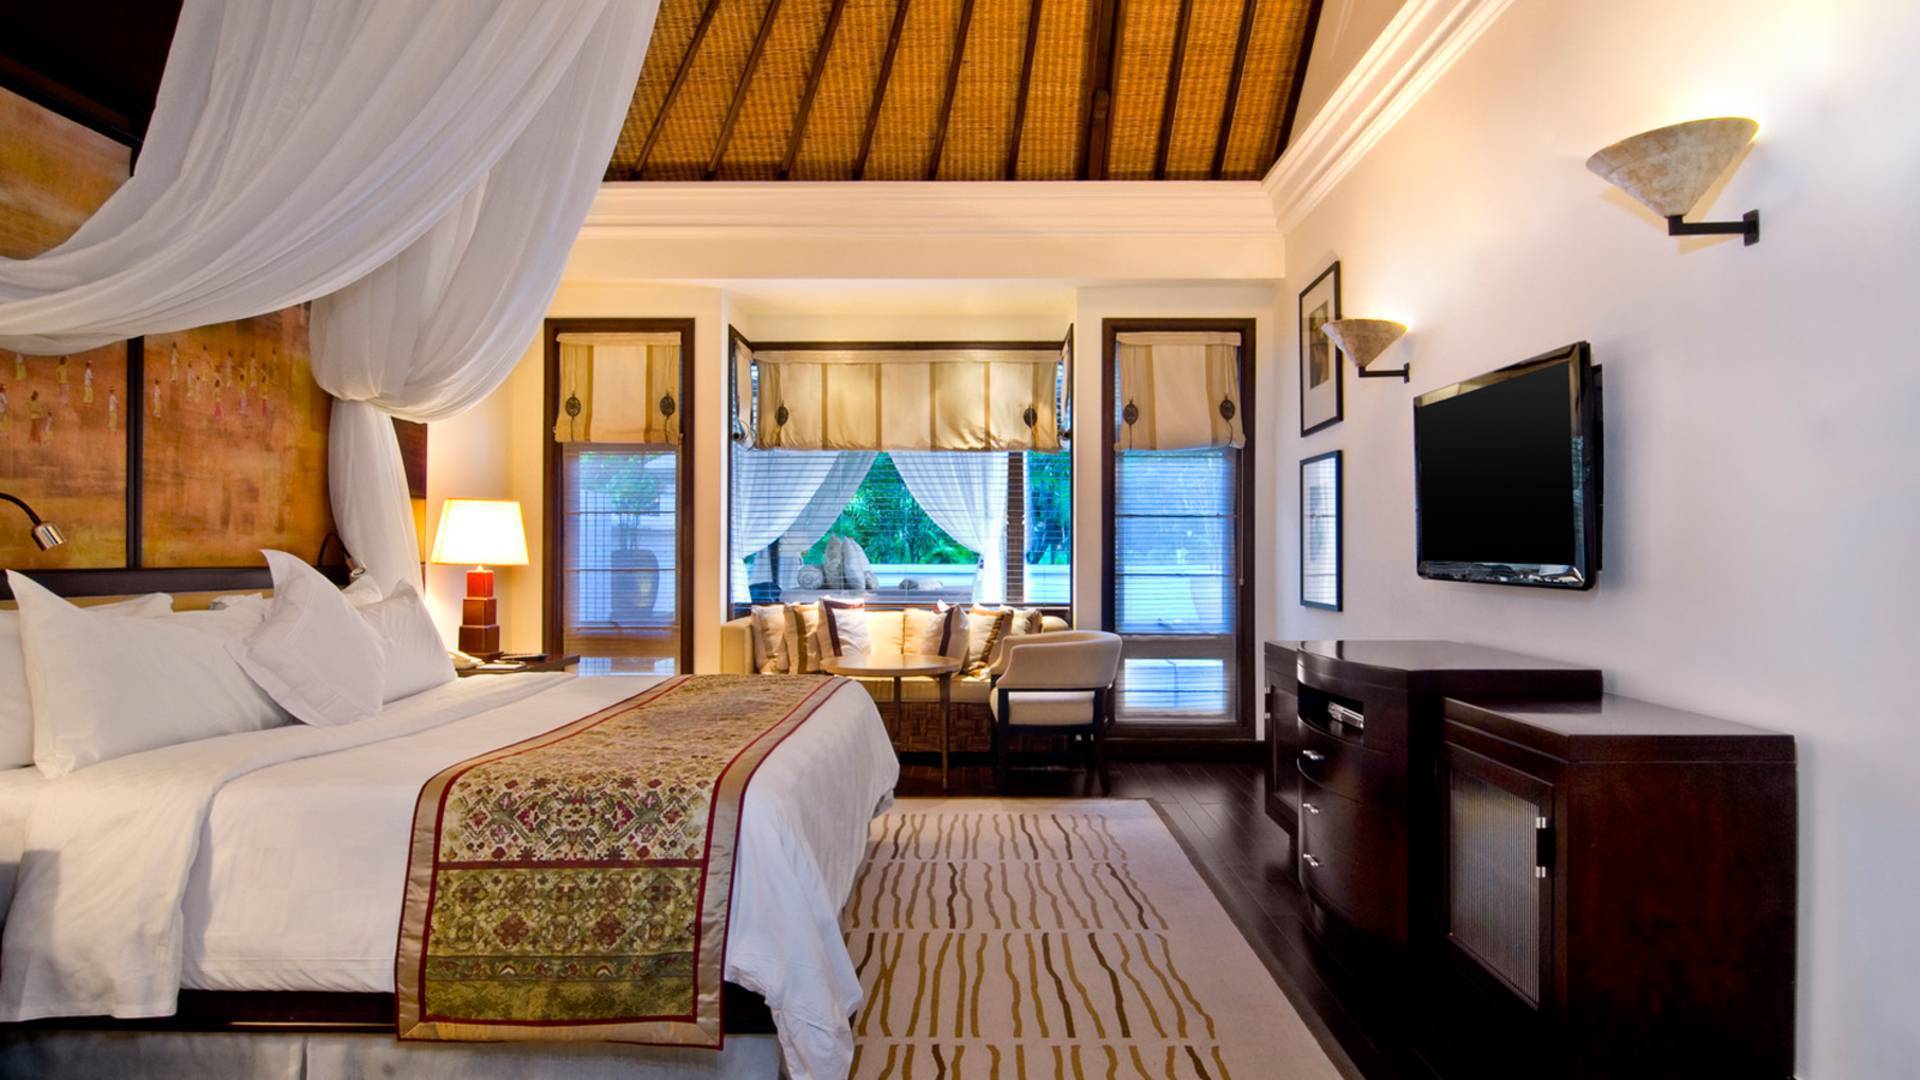 The laguna a luxury collection resort & spa 5* - индонезия, бали - отели | пегас туристик